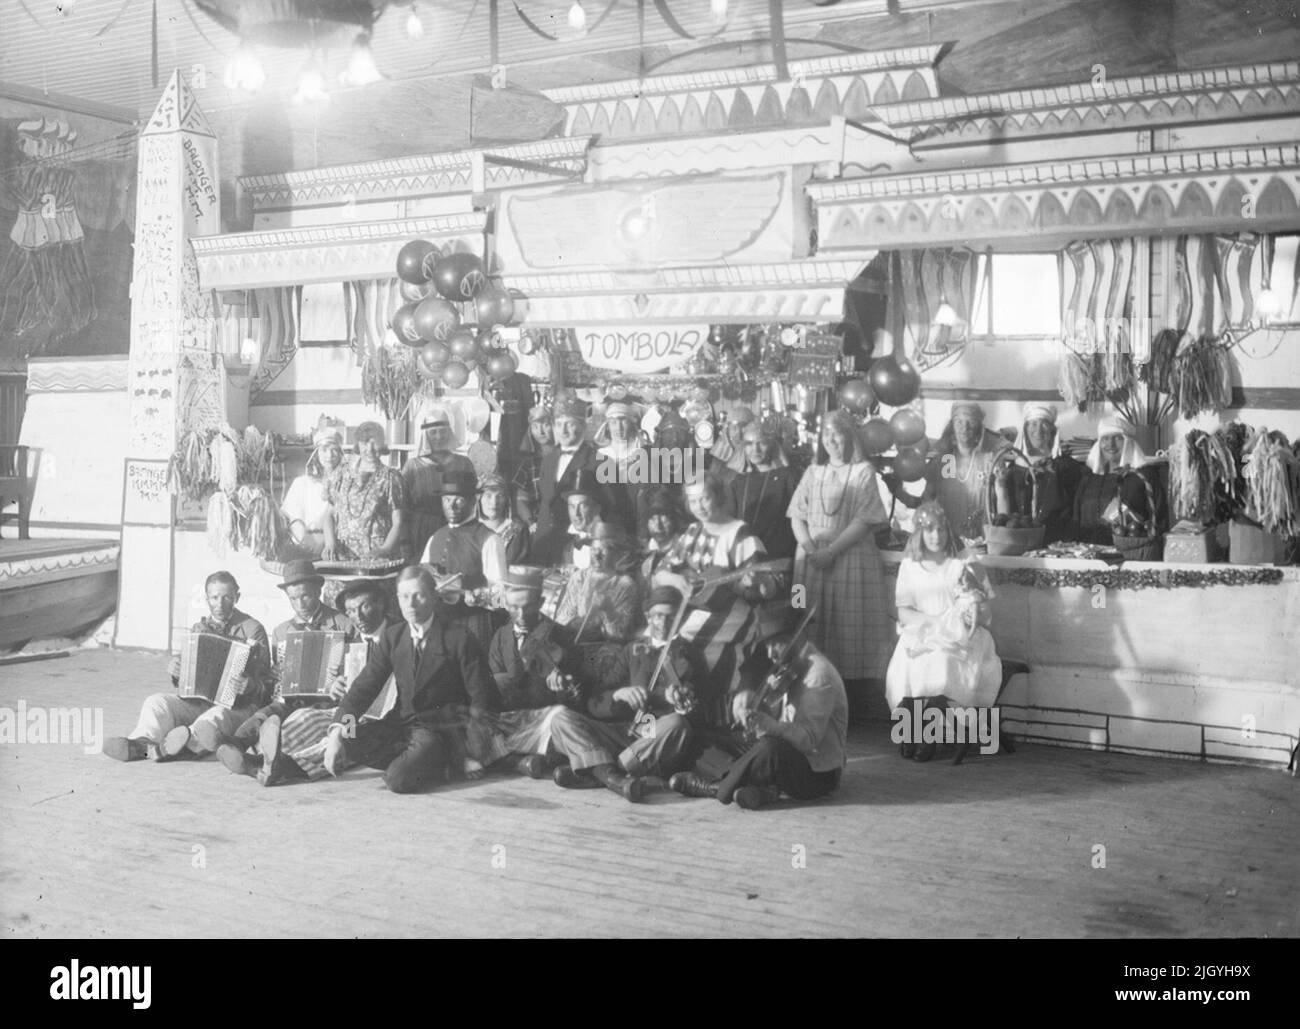 The bazaar 'Tot-Ank-Mammon' in the Societetshuset, organizer Valfrid Lödin, sitting at the front, Östhammar, Uppland 1923. Historical event, name related to Objek: Östhammar's Sports Club Stock Photo